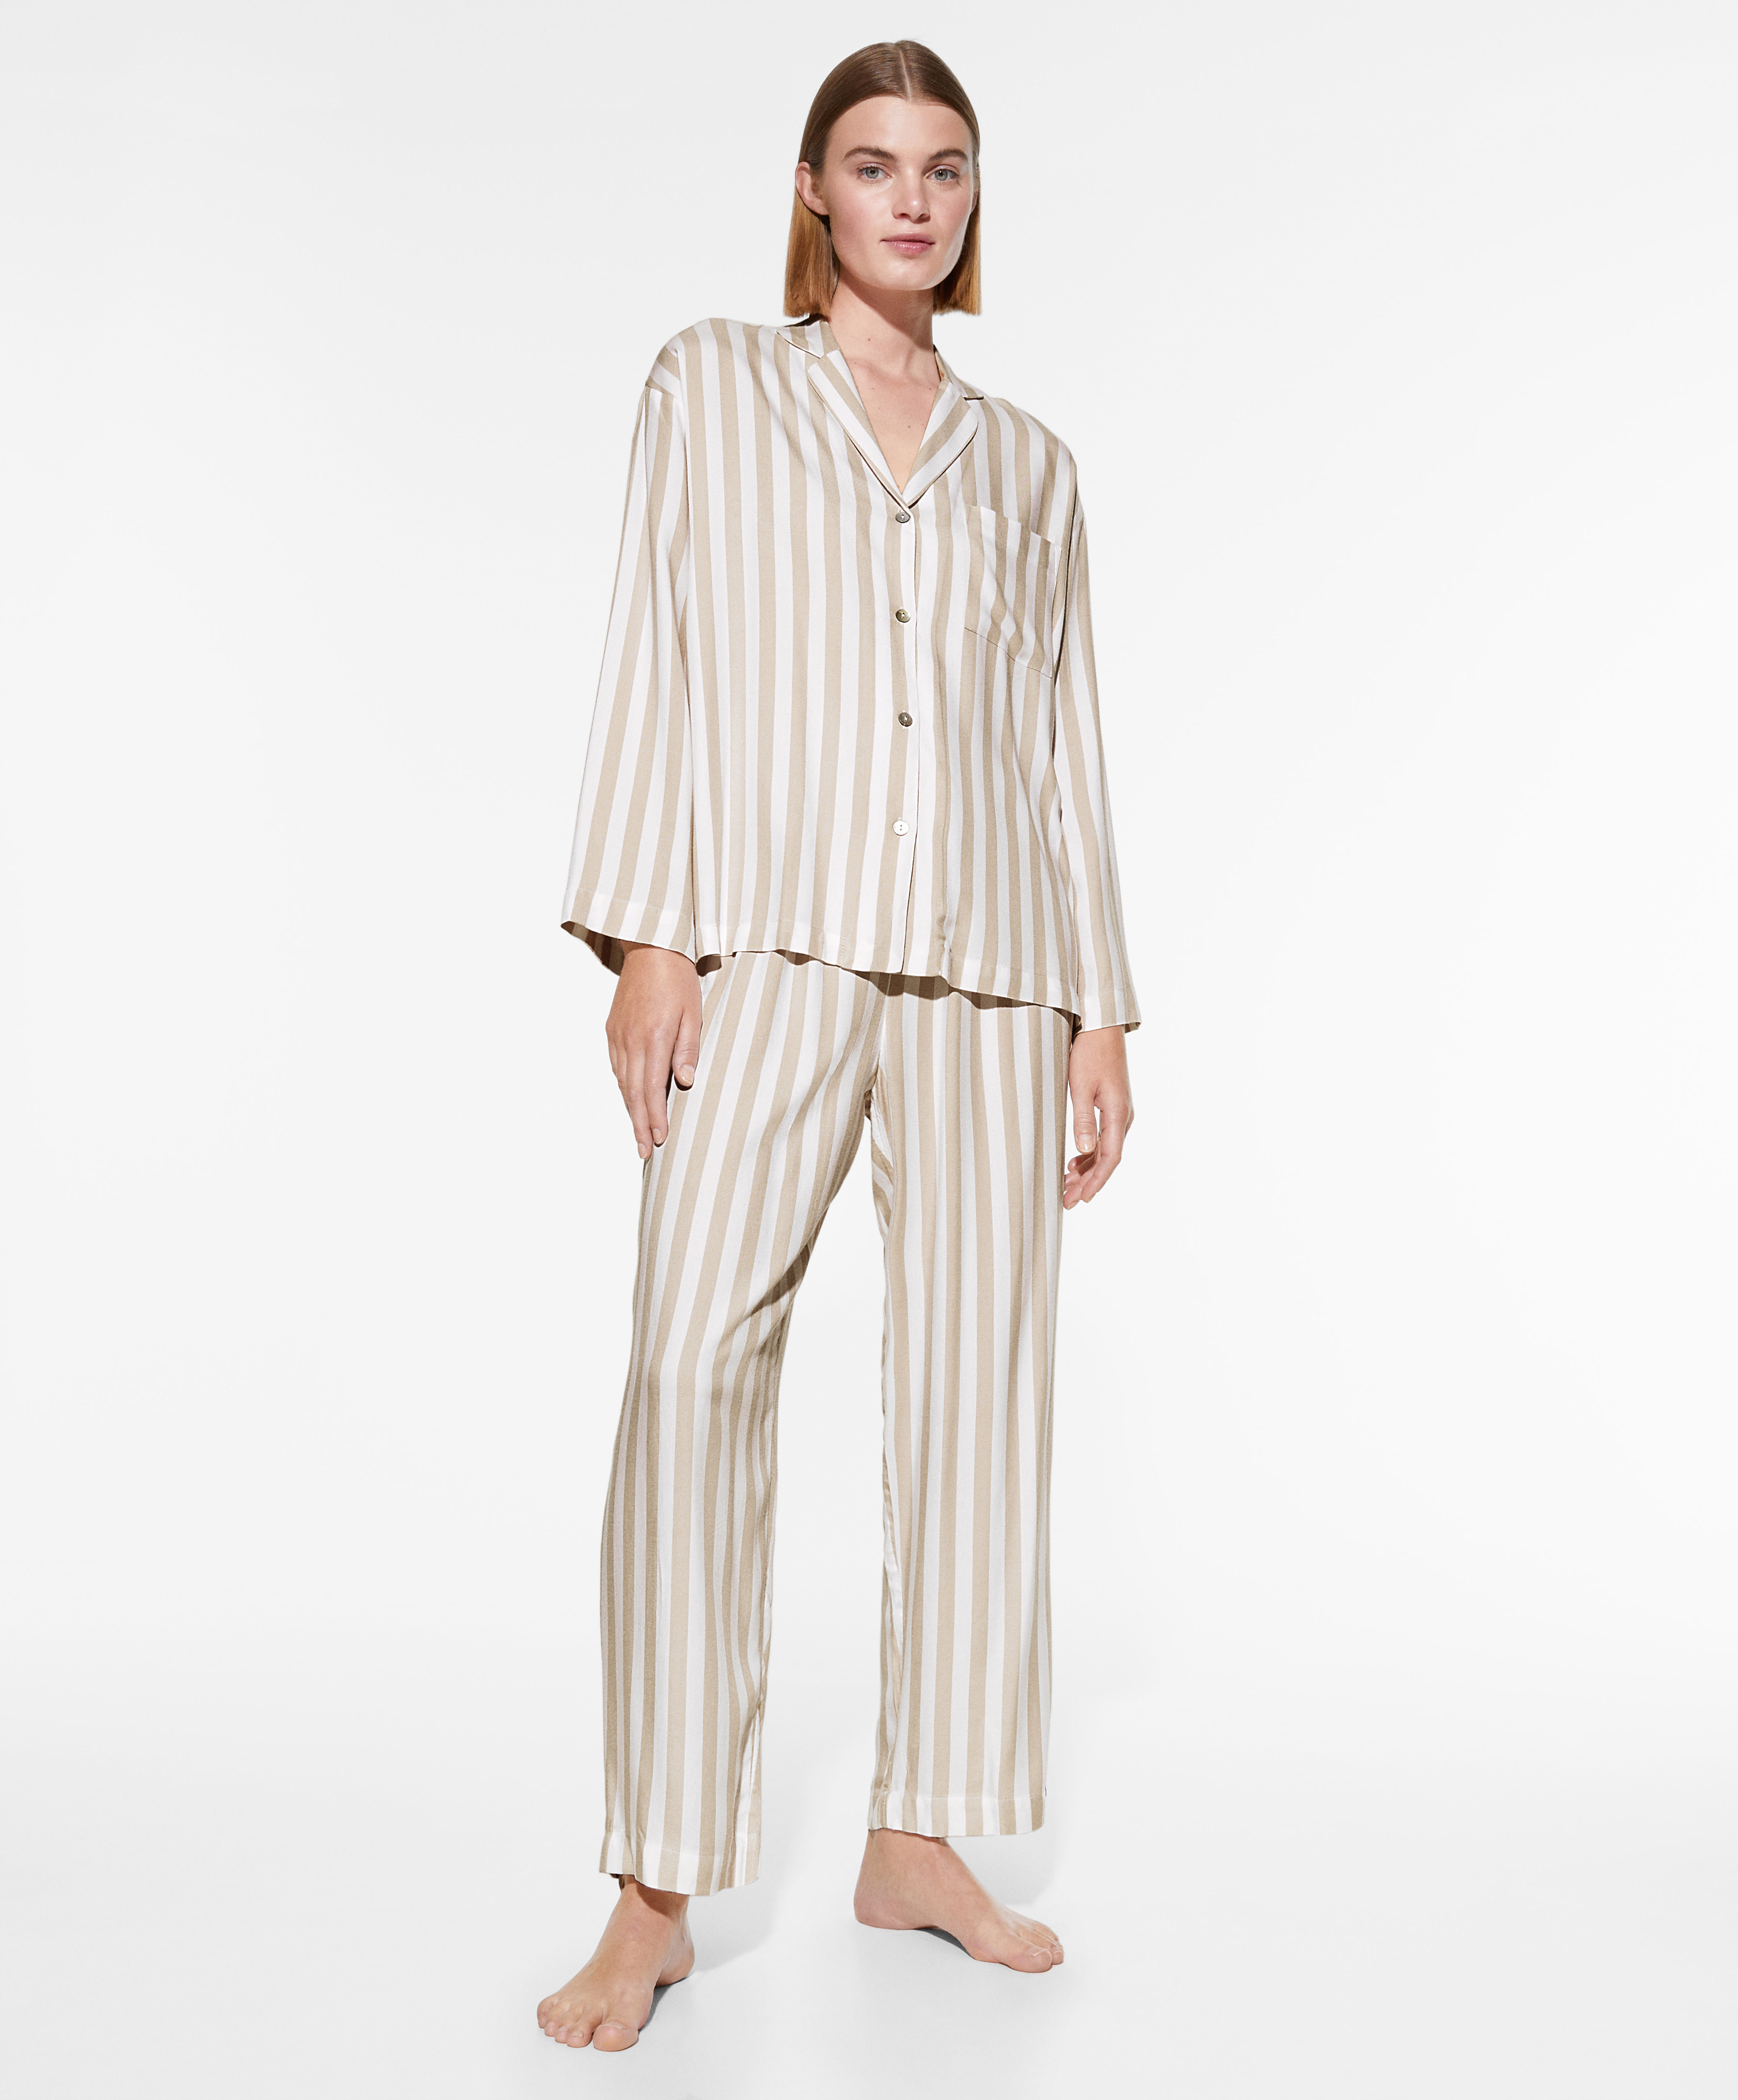 Stripe long pyjama set